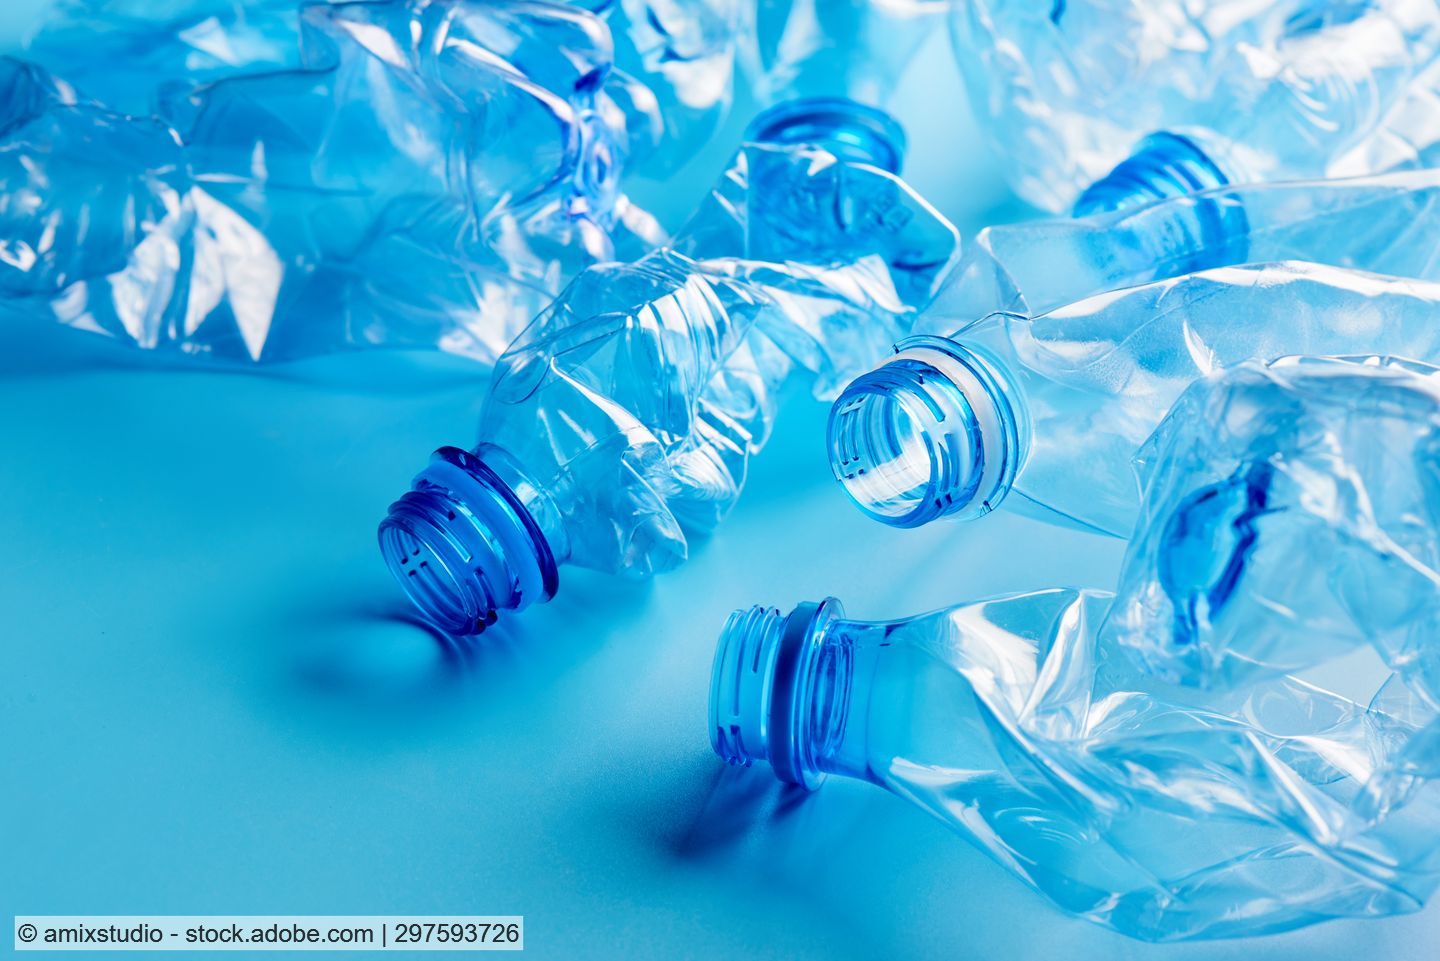 Clear crushed PET bottles lie scattered against a light blue background